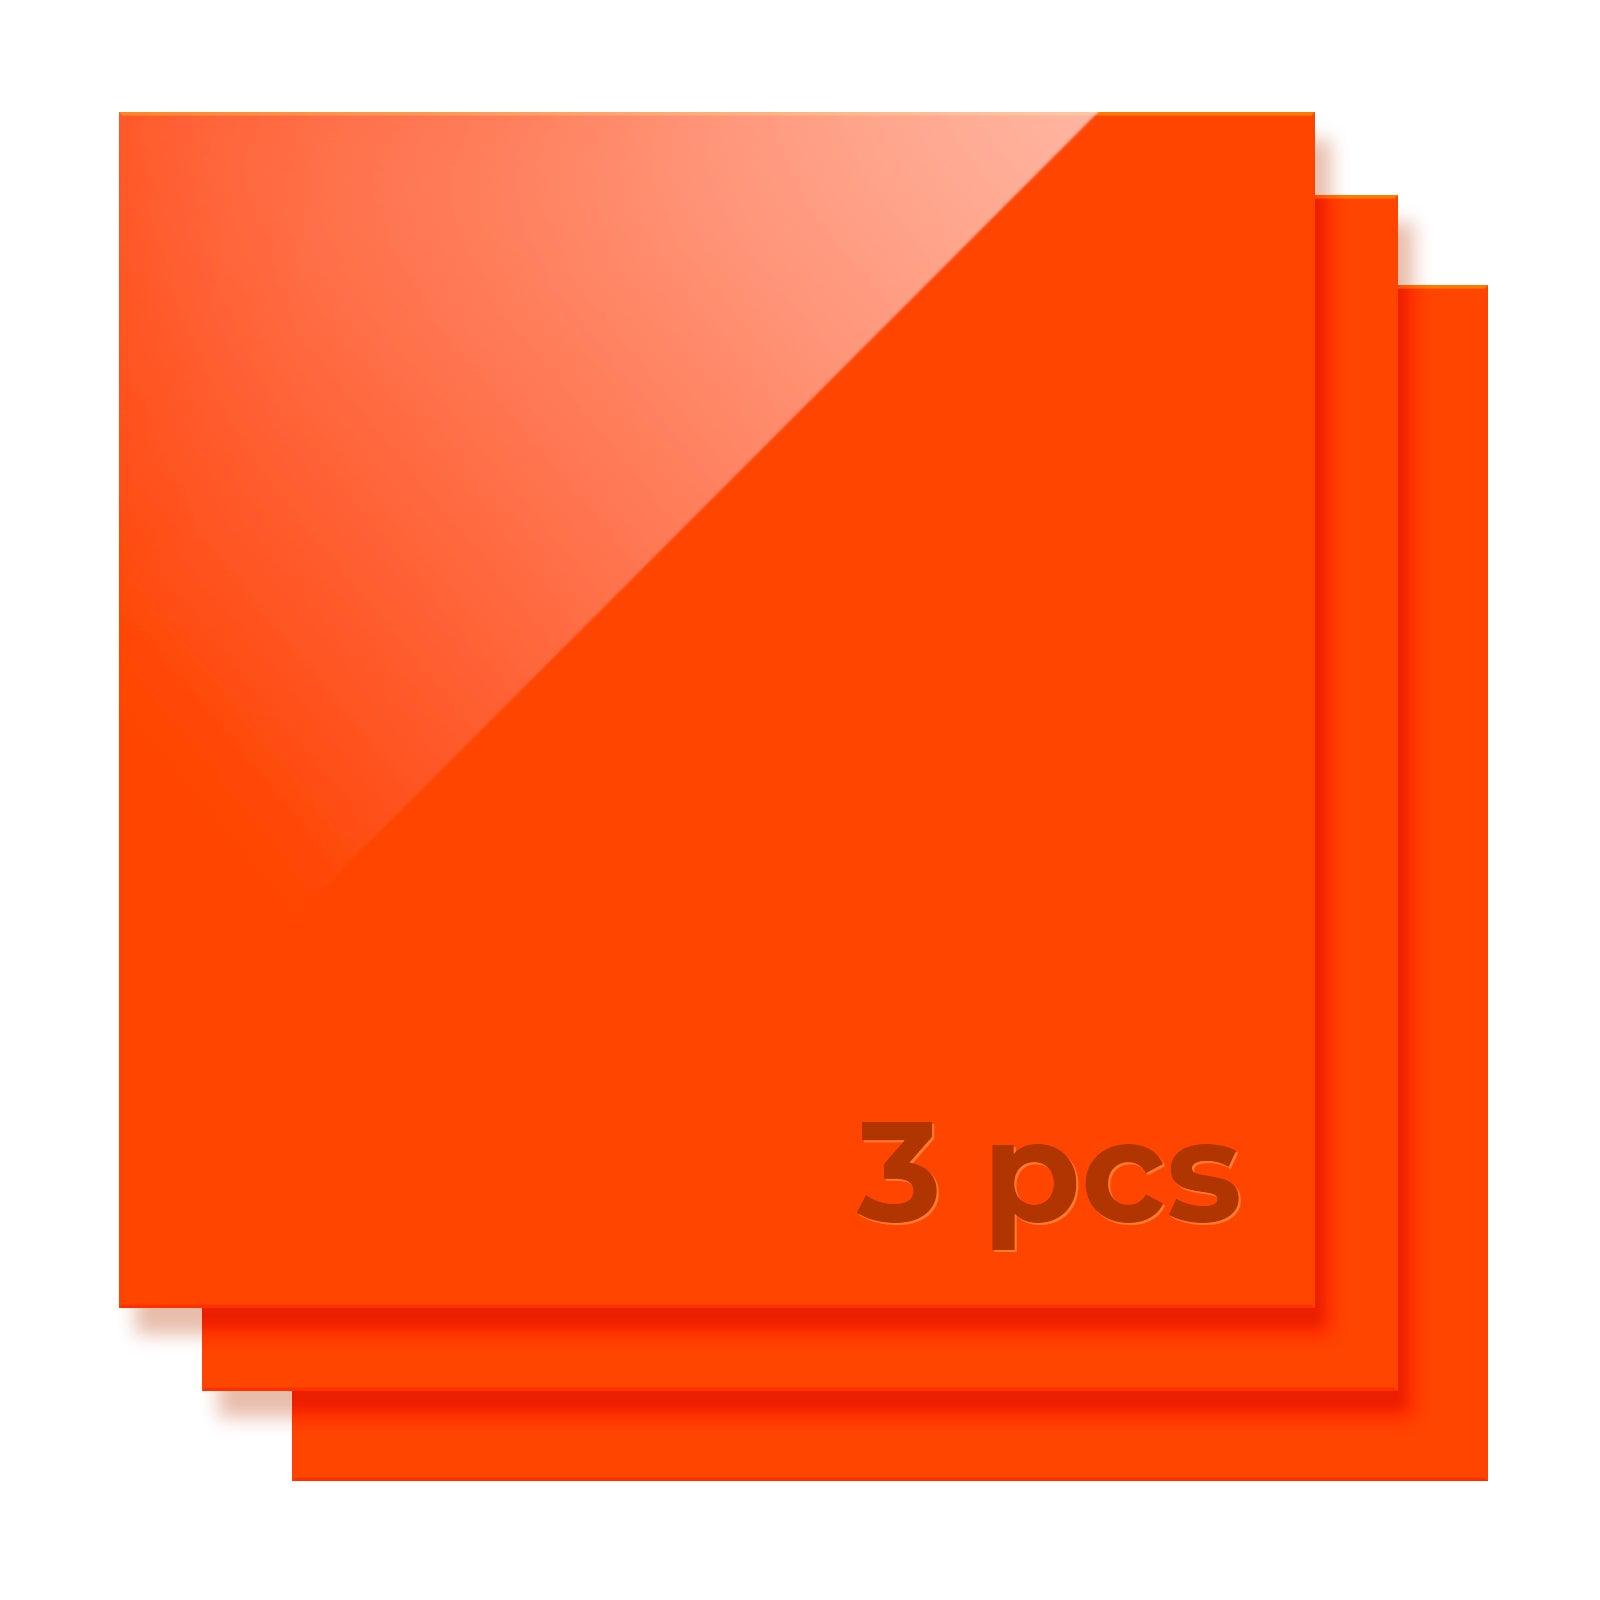 3mm Orange Opaque Glossy Acrylic Sheet (3pcs) - xTool France Store